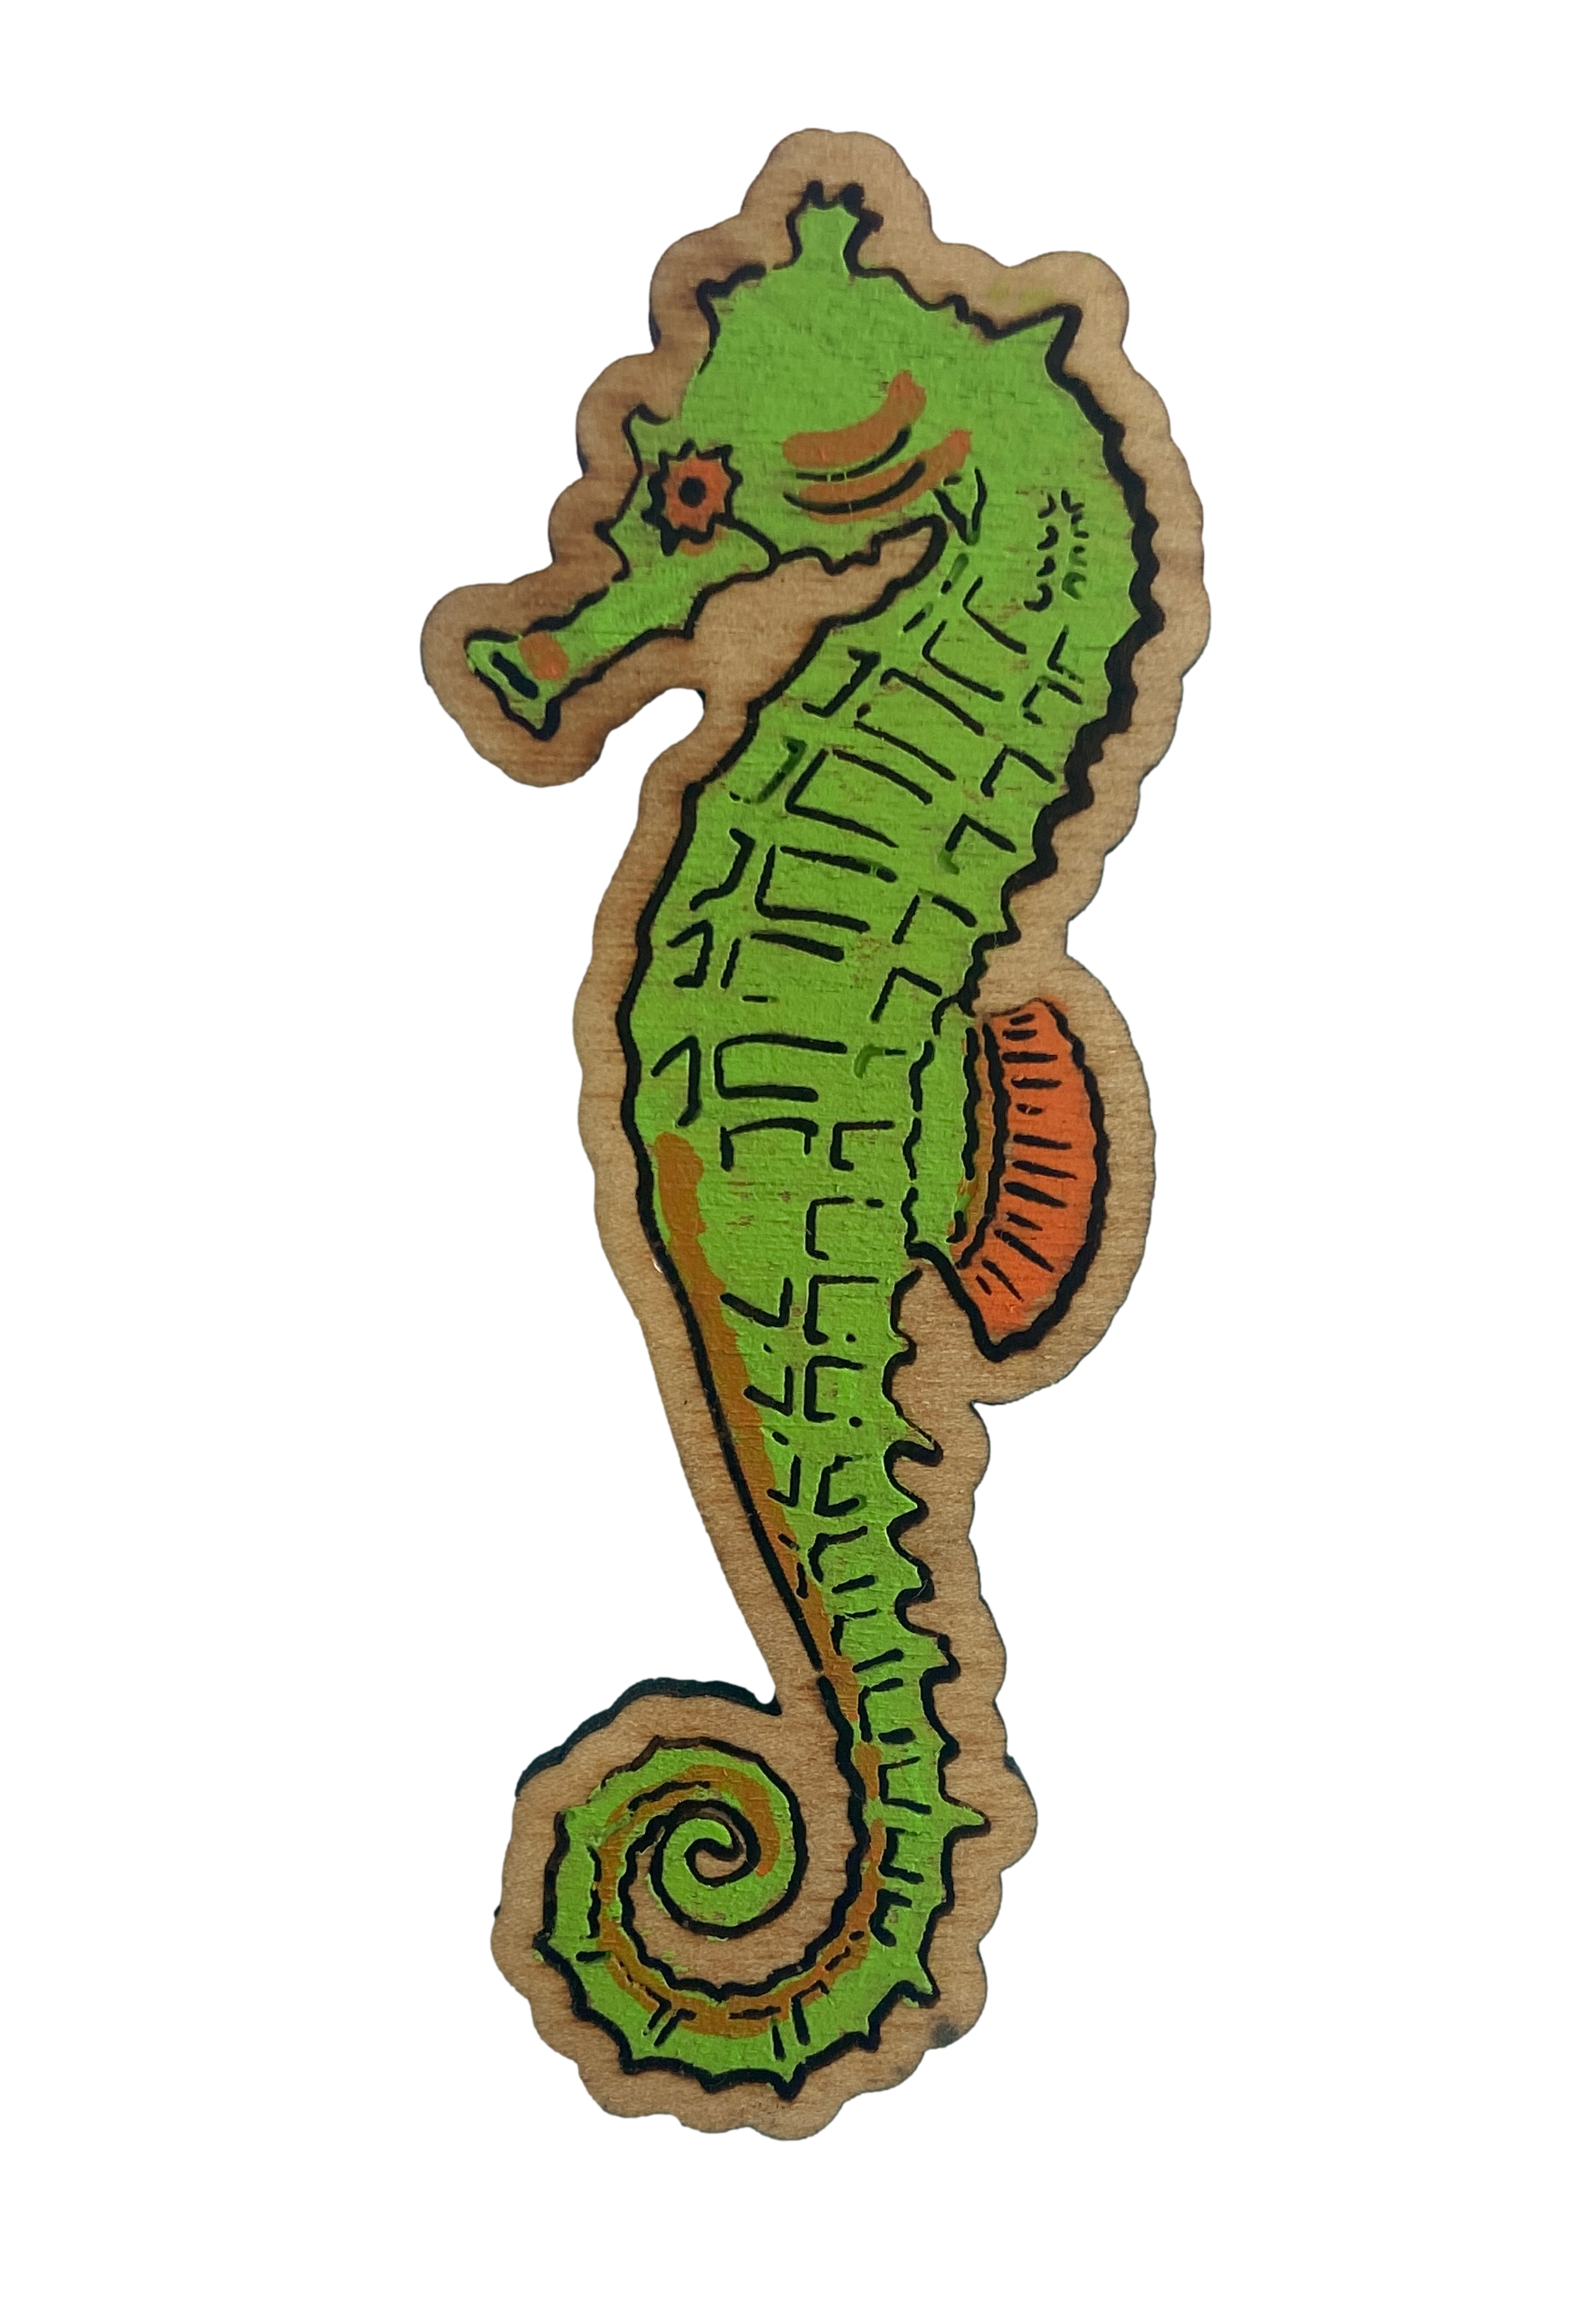 green hand-made wooden sea horse pin by Jennifer Janiak-Ross